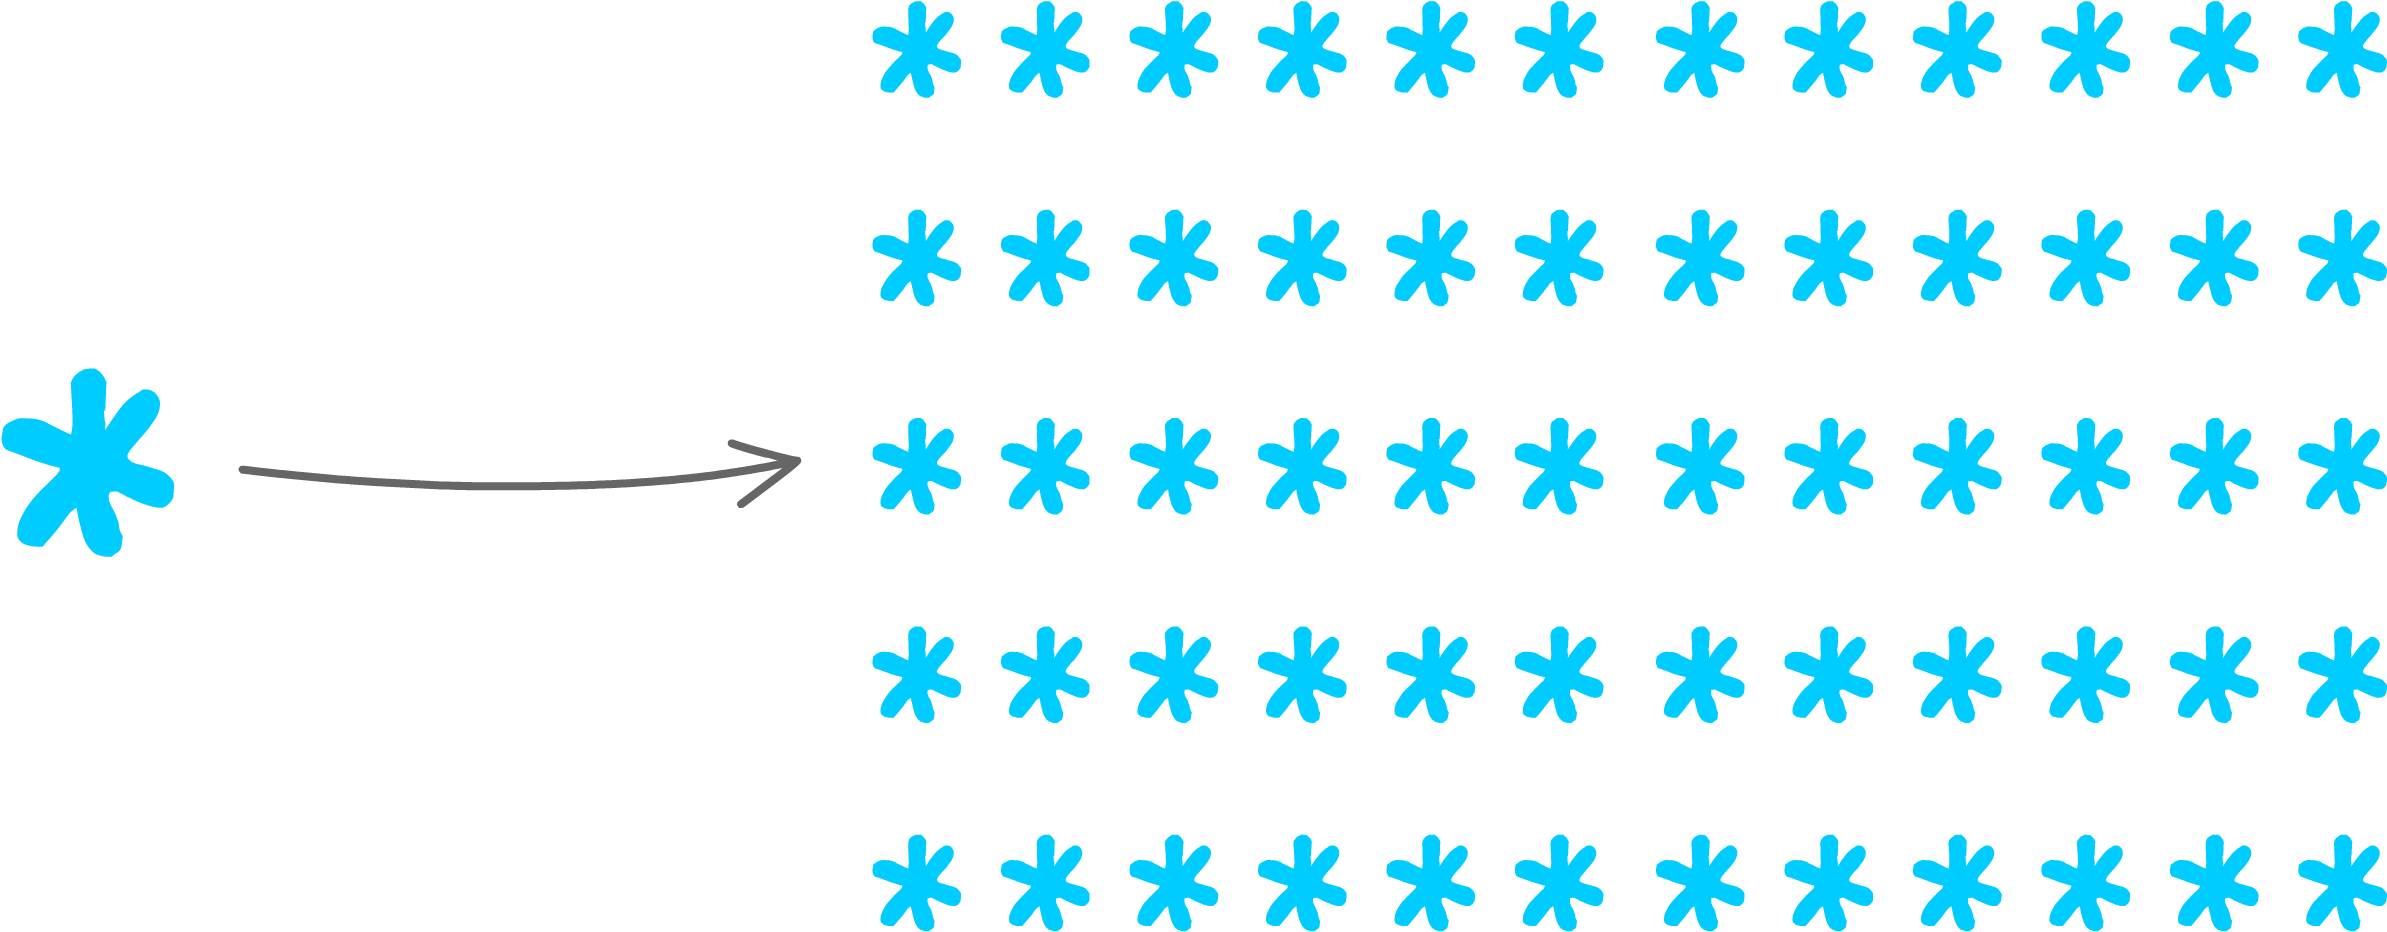 Falling Snow Gif Transparent Background - Snowflake Array (2414x935)